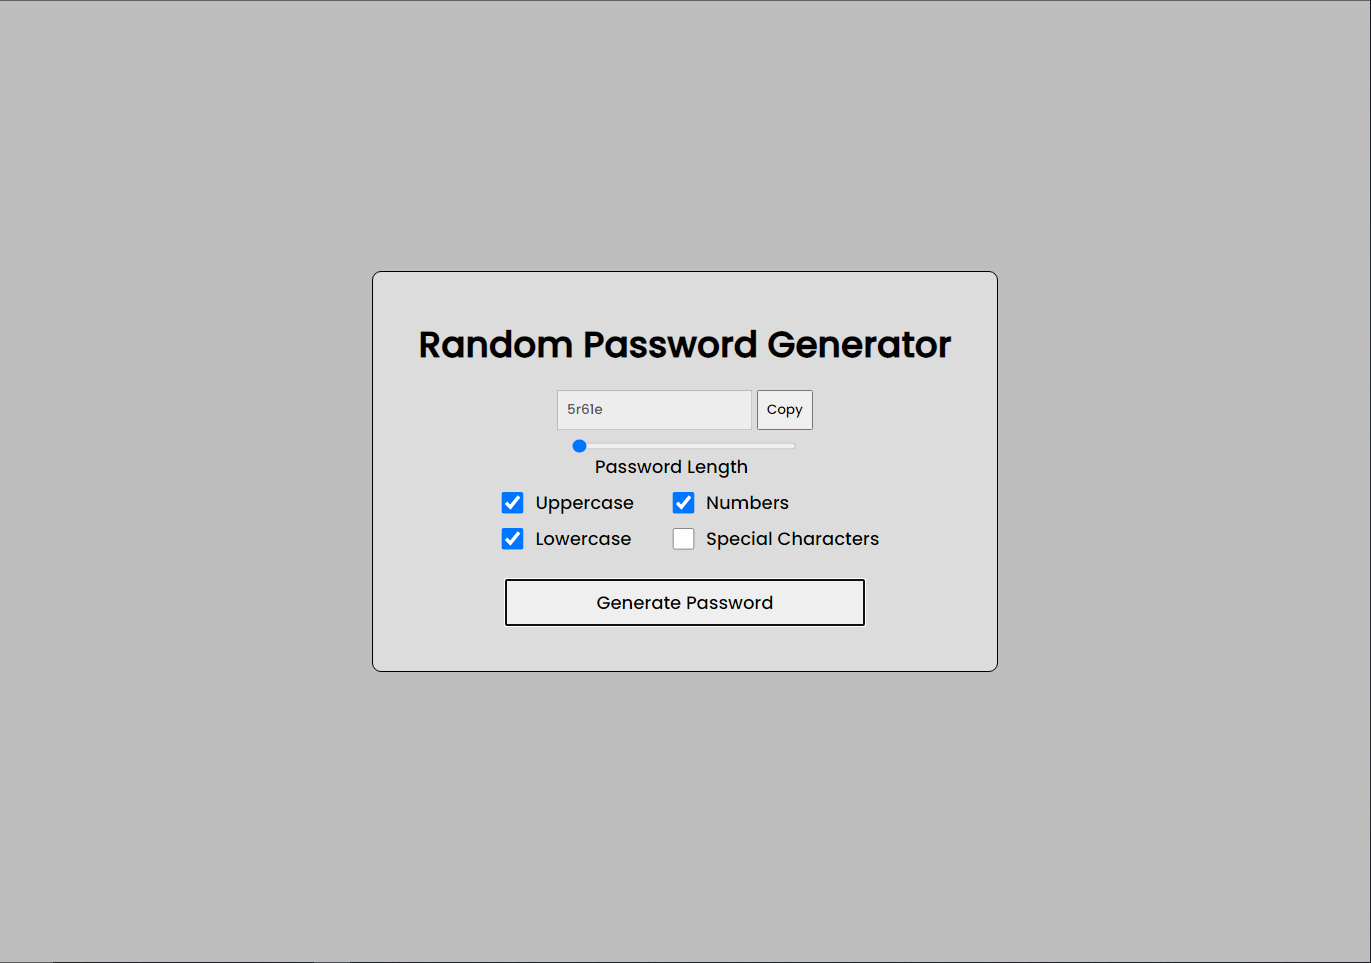 Generating Password